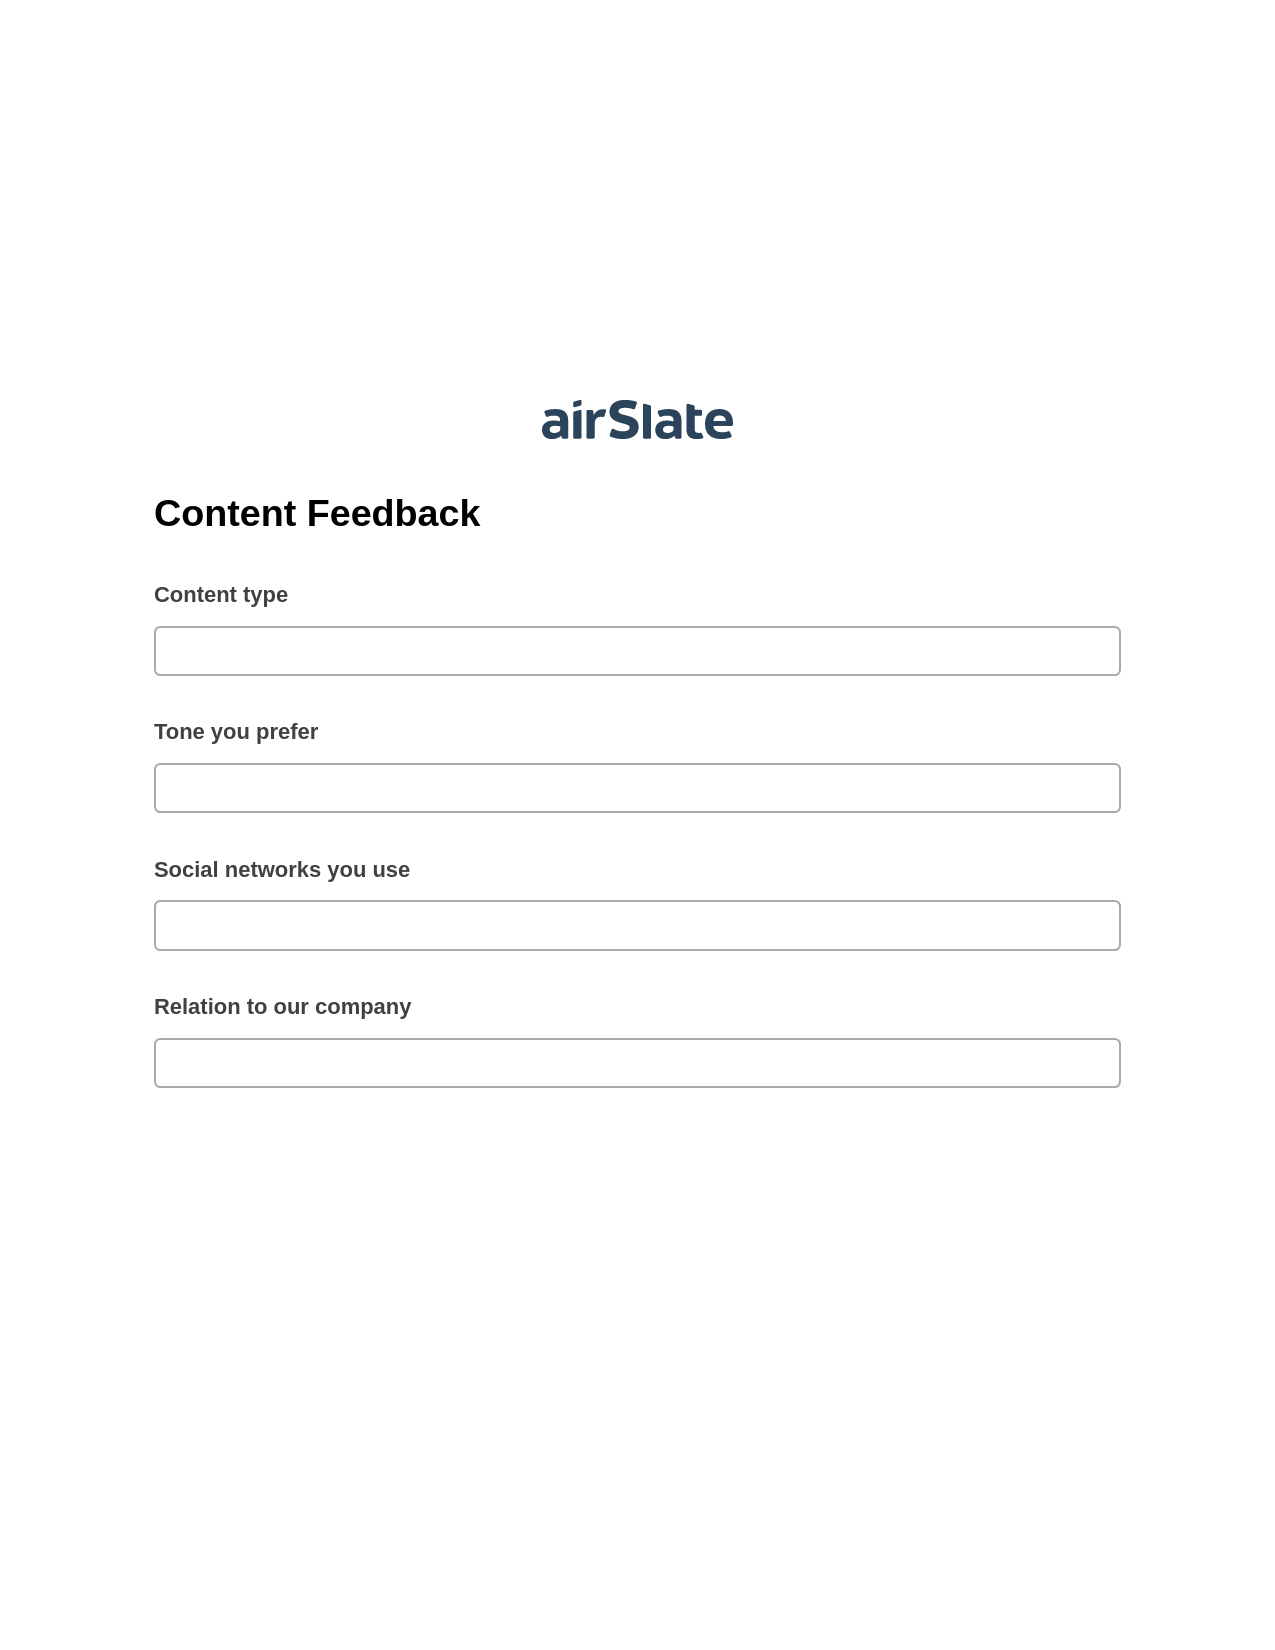 Content Feedback Pre-fill Slate from MS Dynamics 365 Records Bot, SendGrid send Campaign bot, Webhook Postfinish Bot